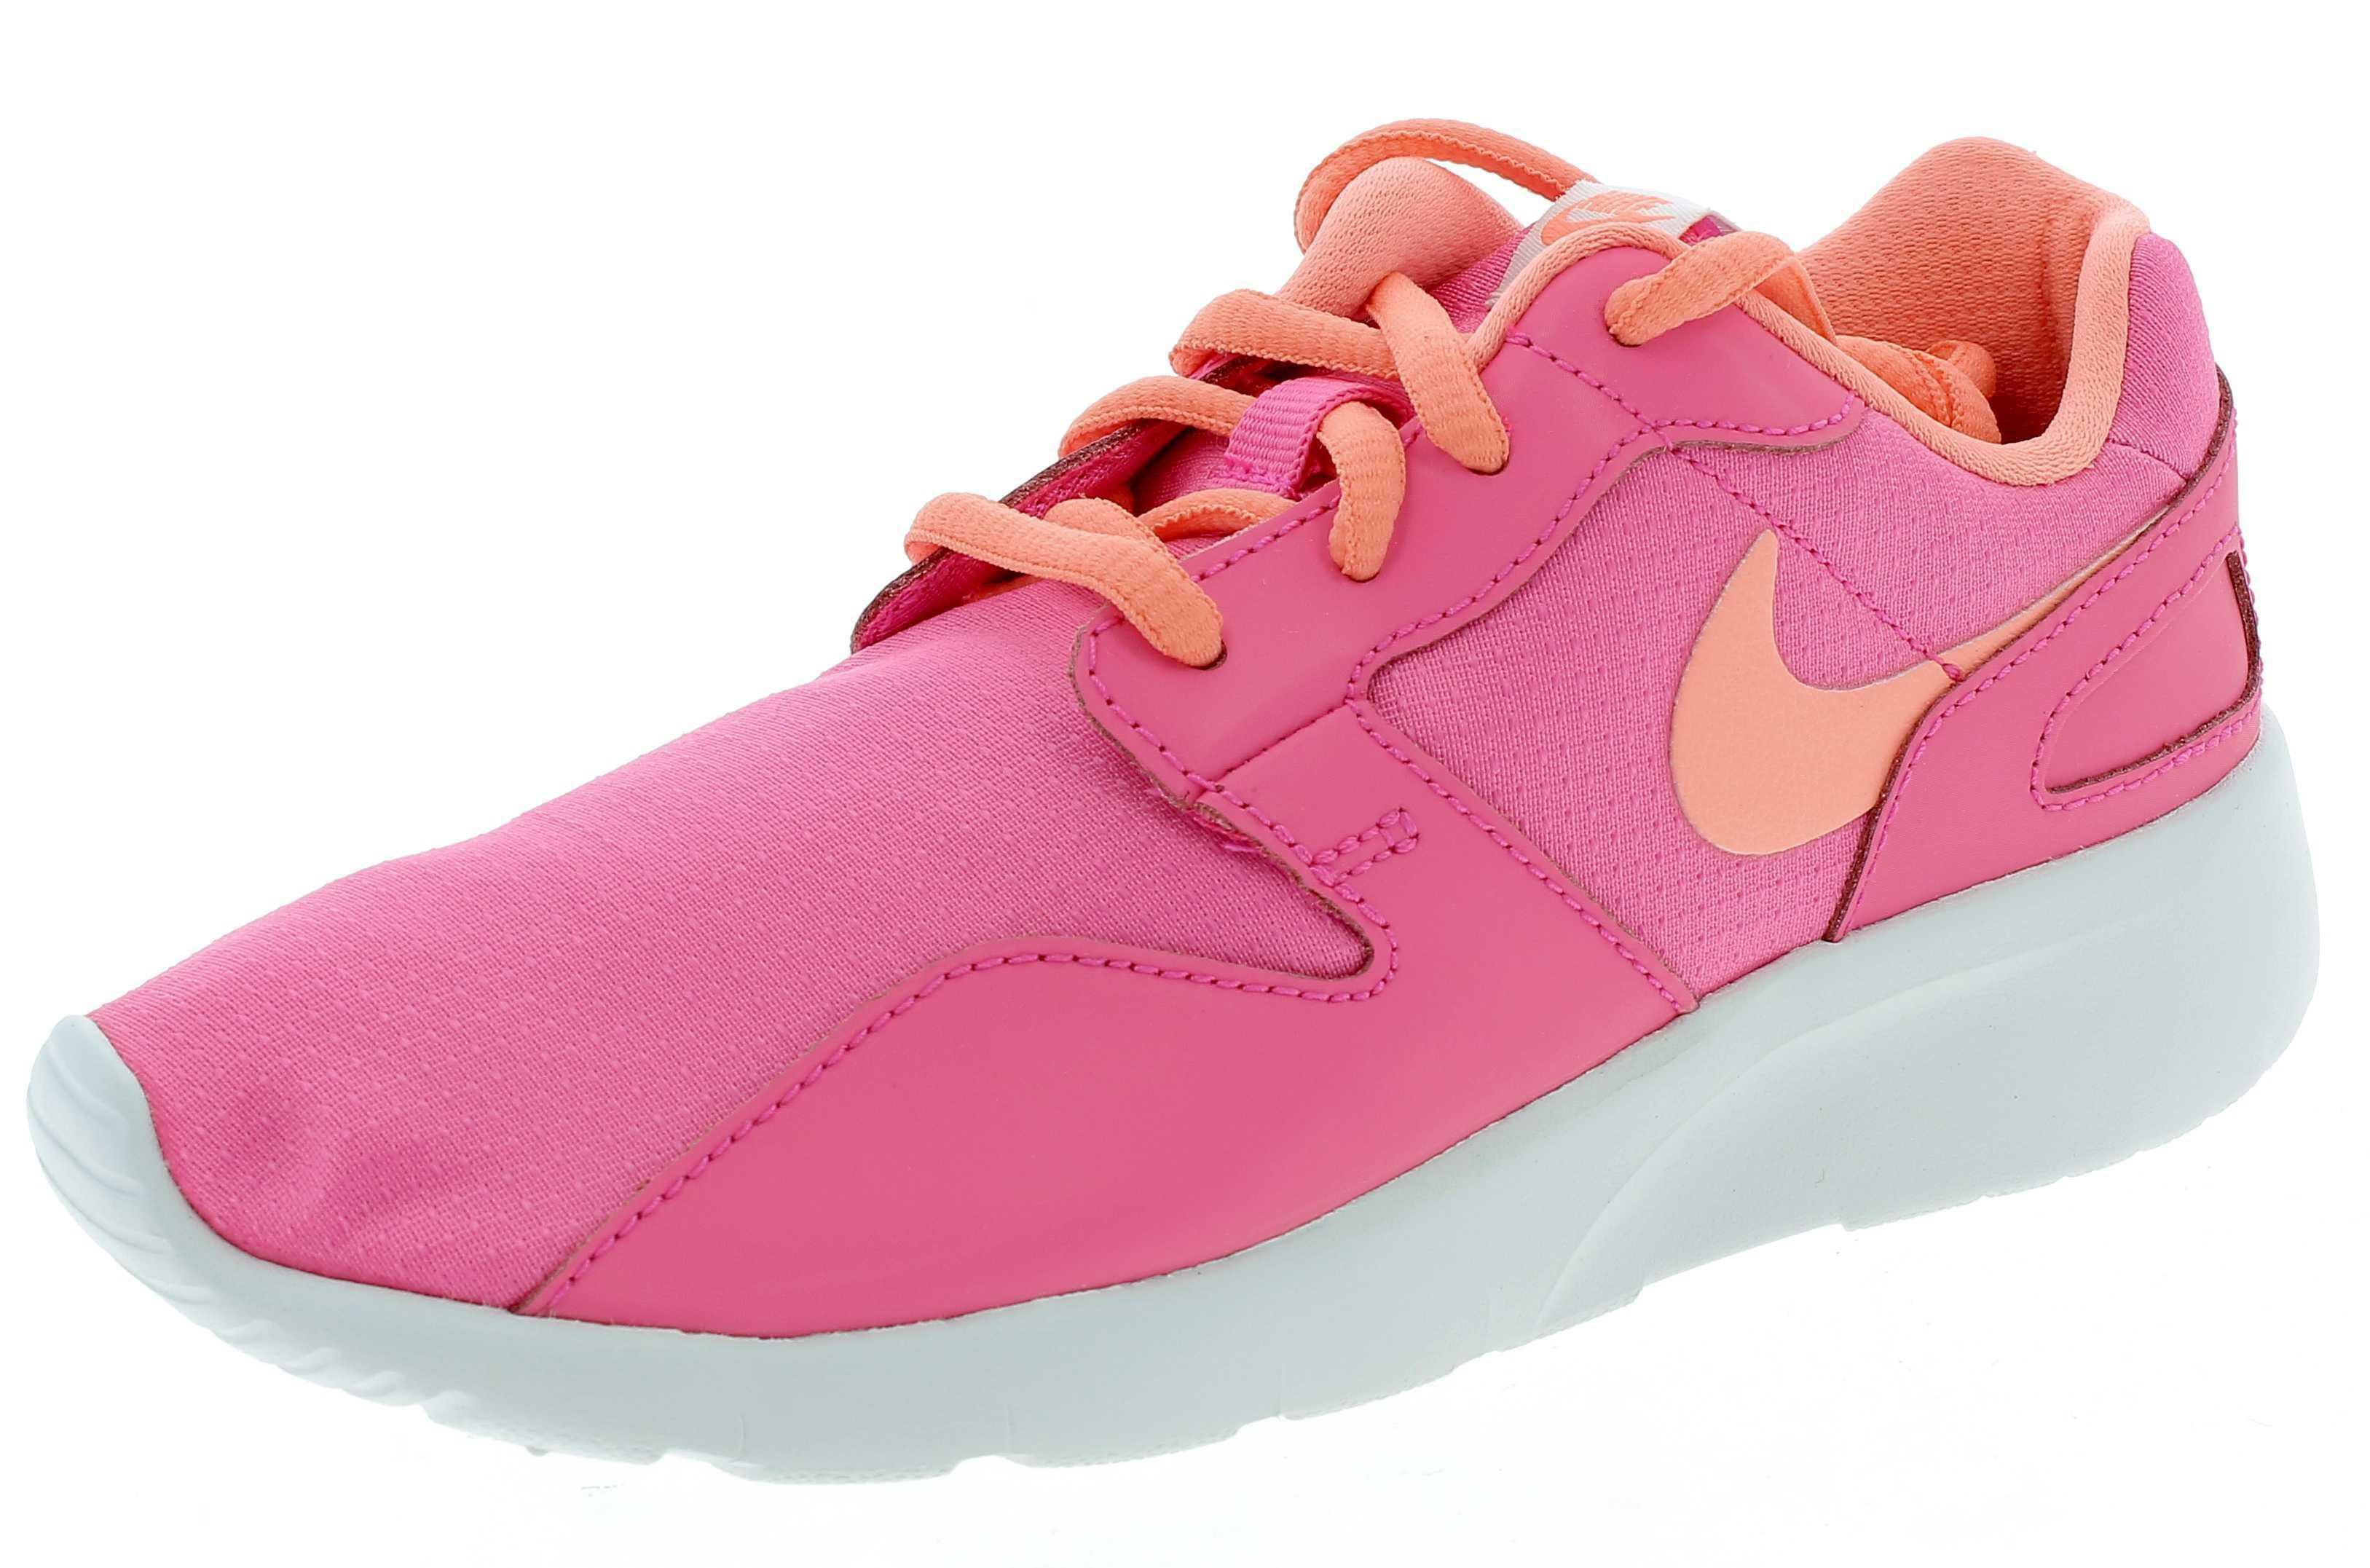 Nike kaishi (ps) scarpe sportive bambina rosa pelle tela 705493